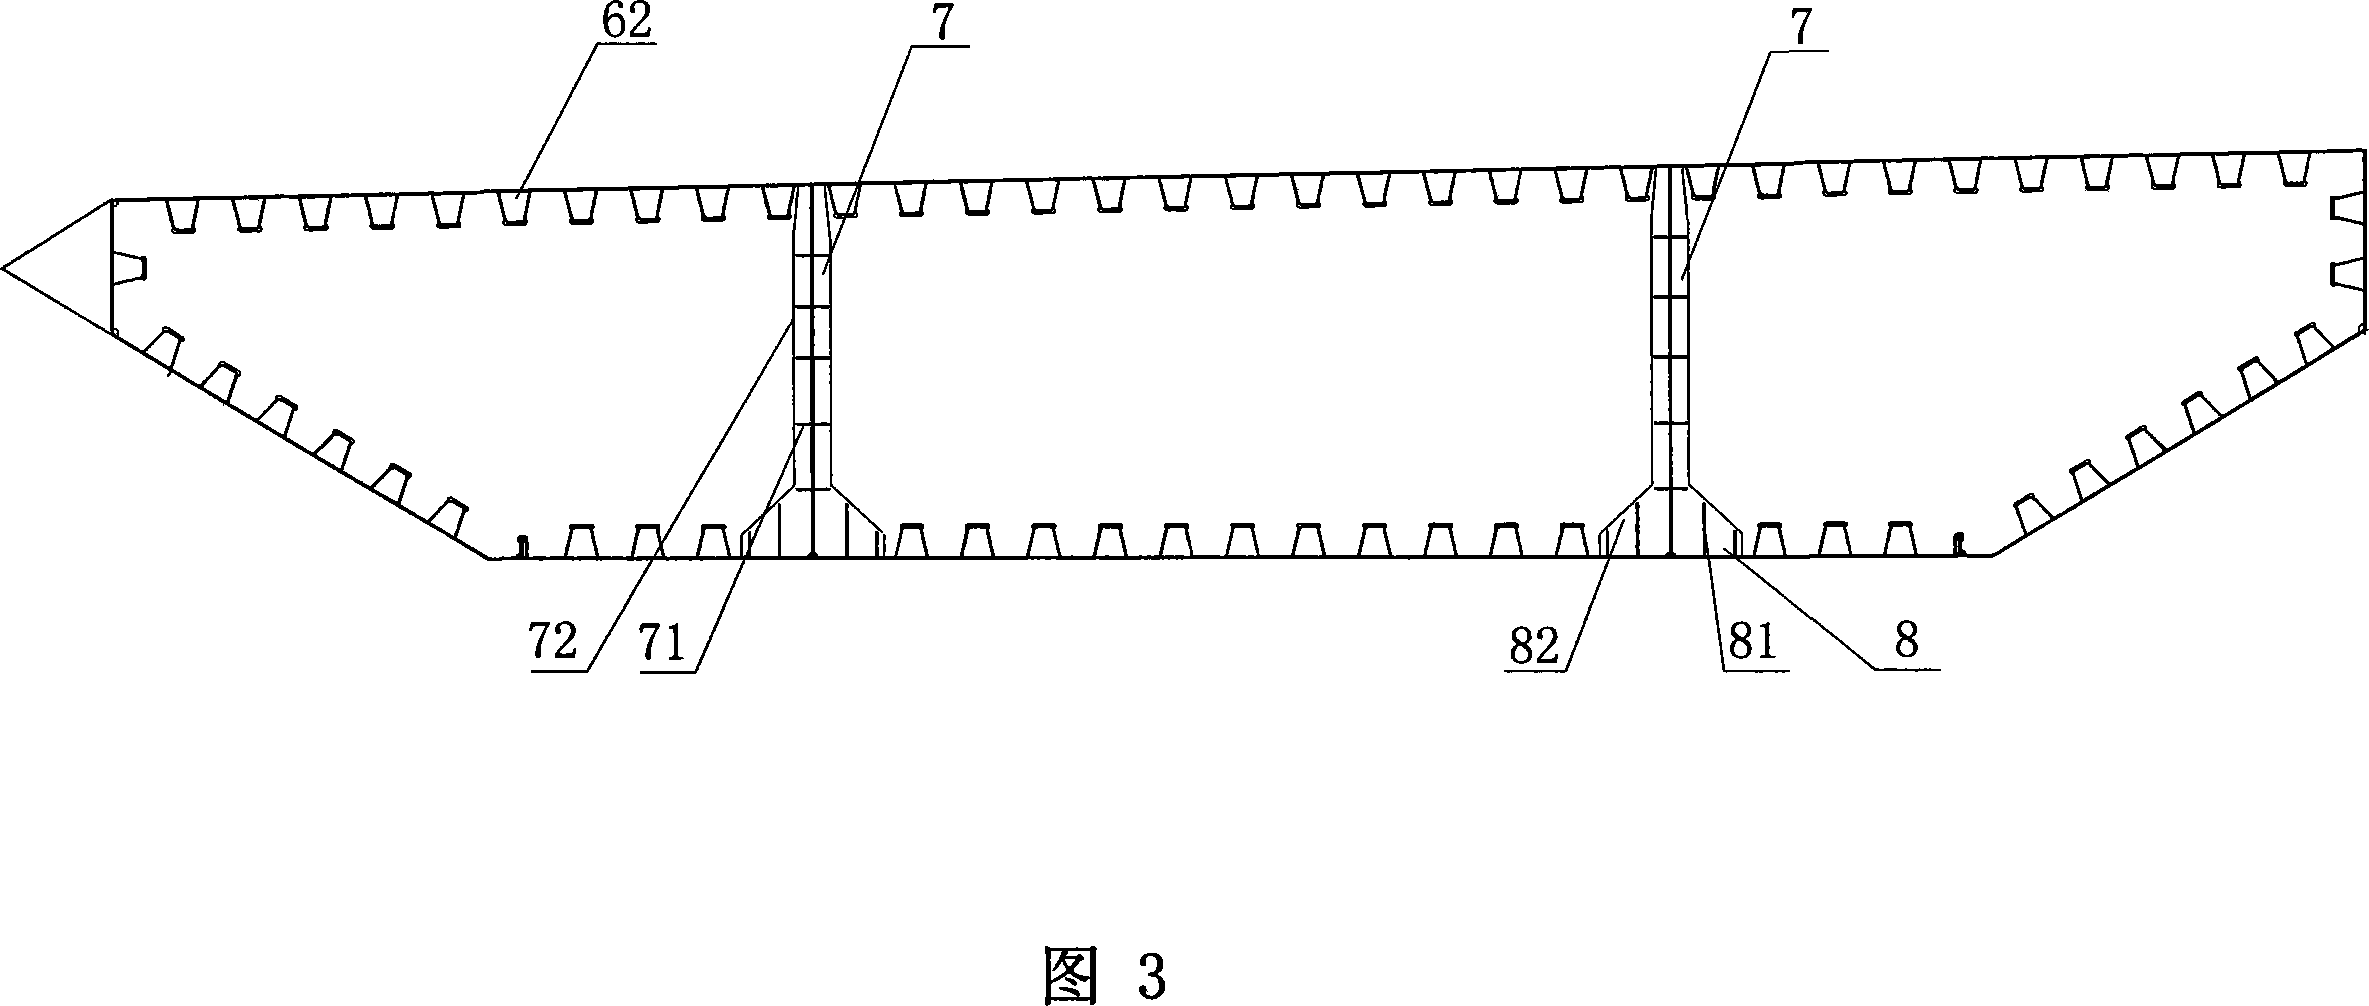 Main beam applied for single-tower self-anchored suspension bridge